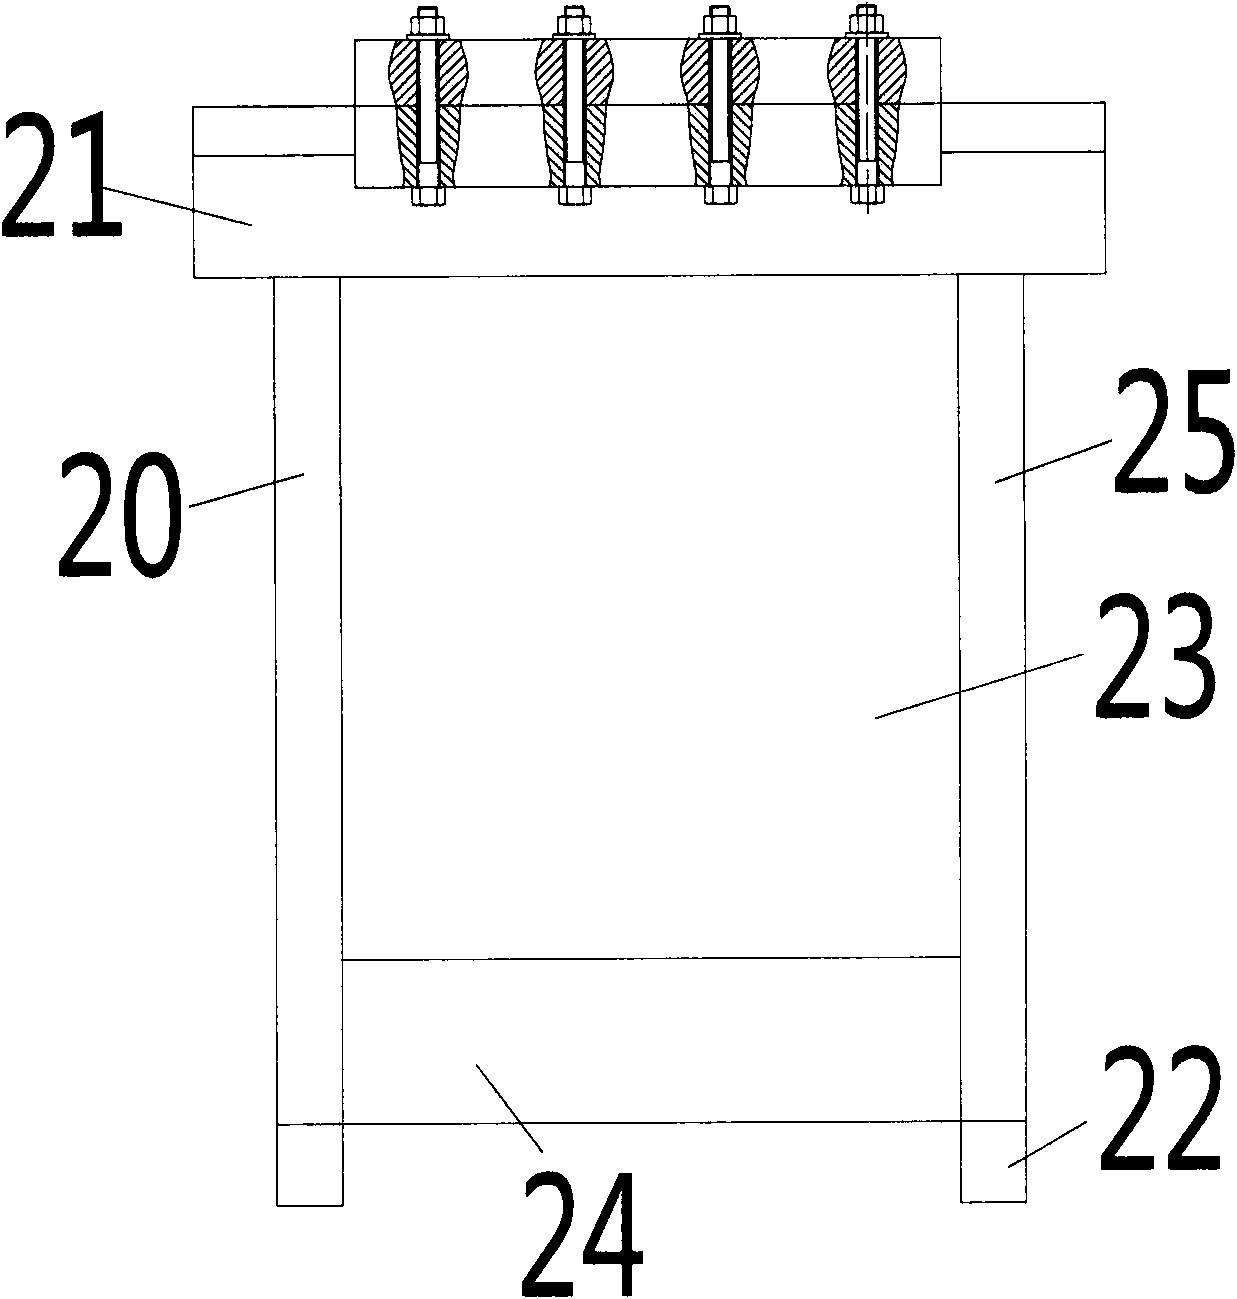 U-shaped plug board stamping die and U-shaped plug board stamping method